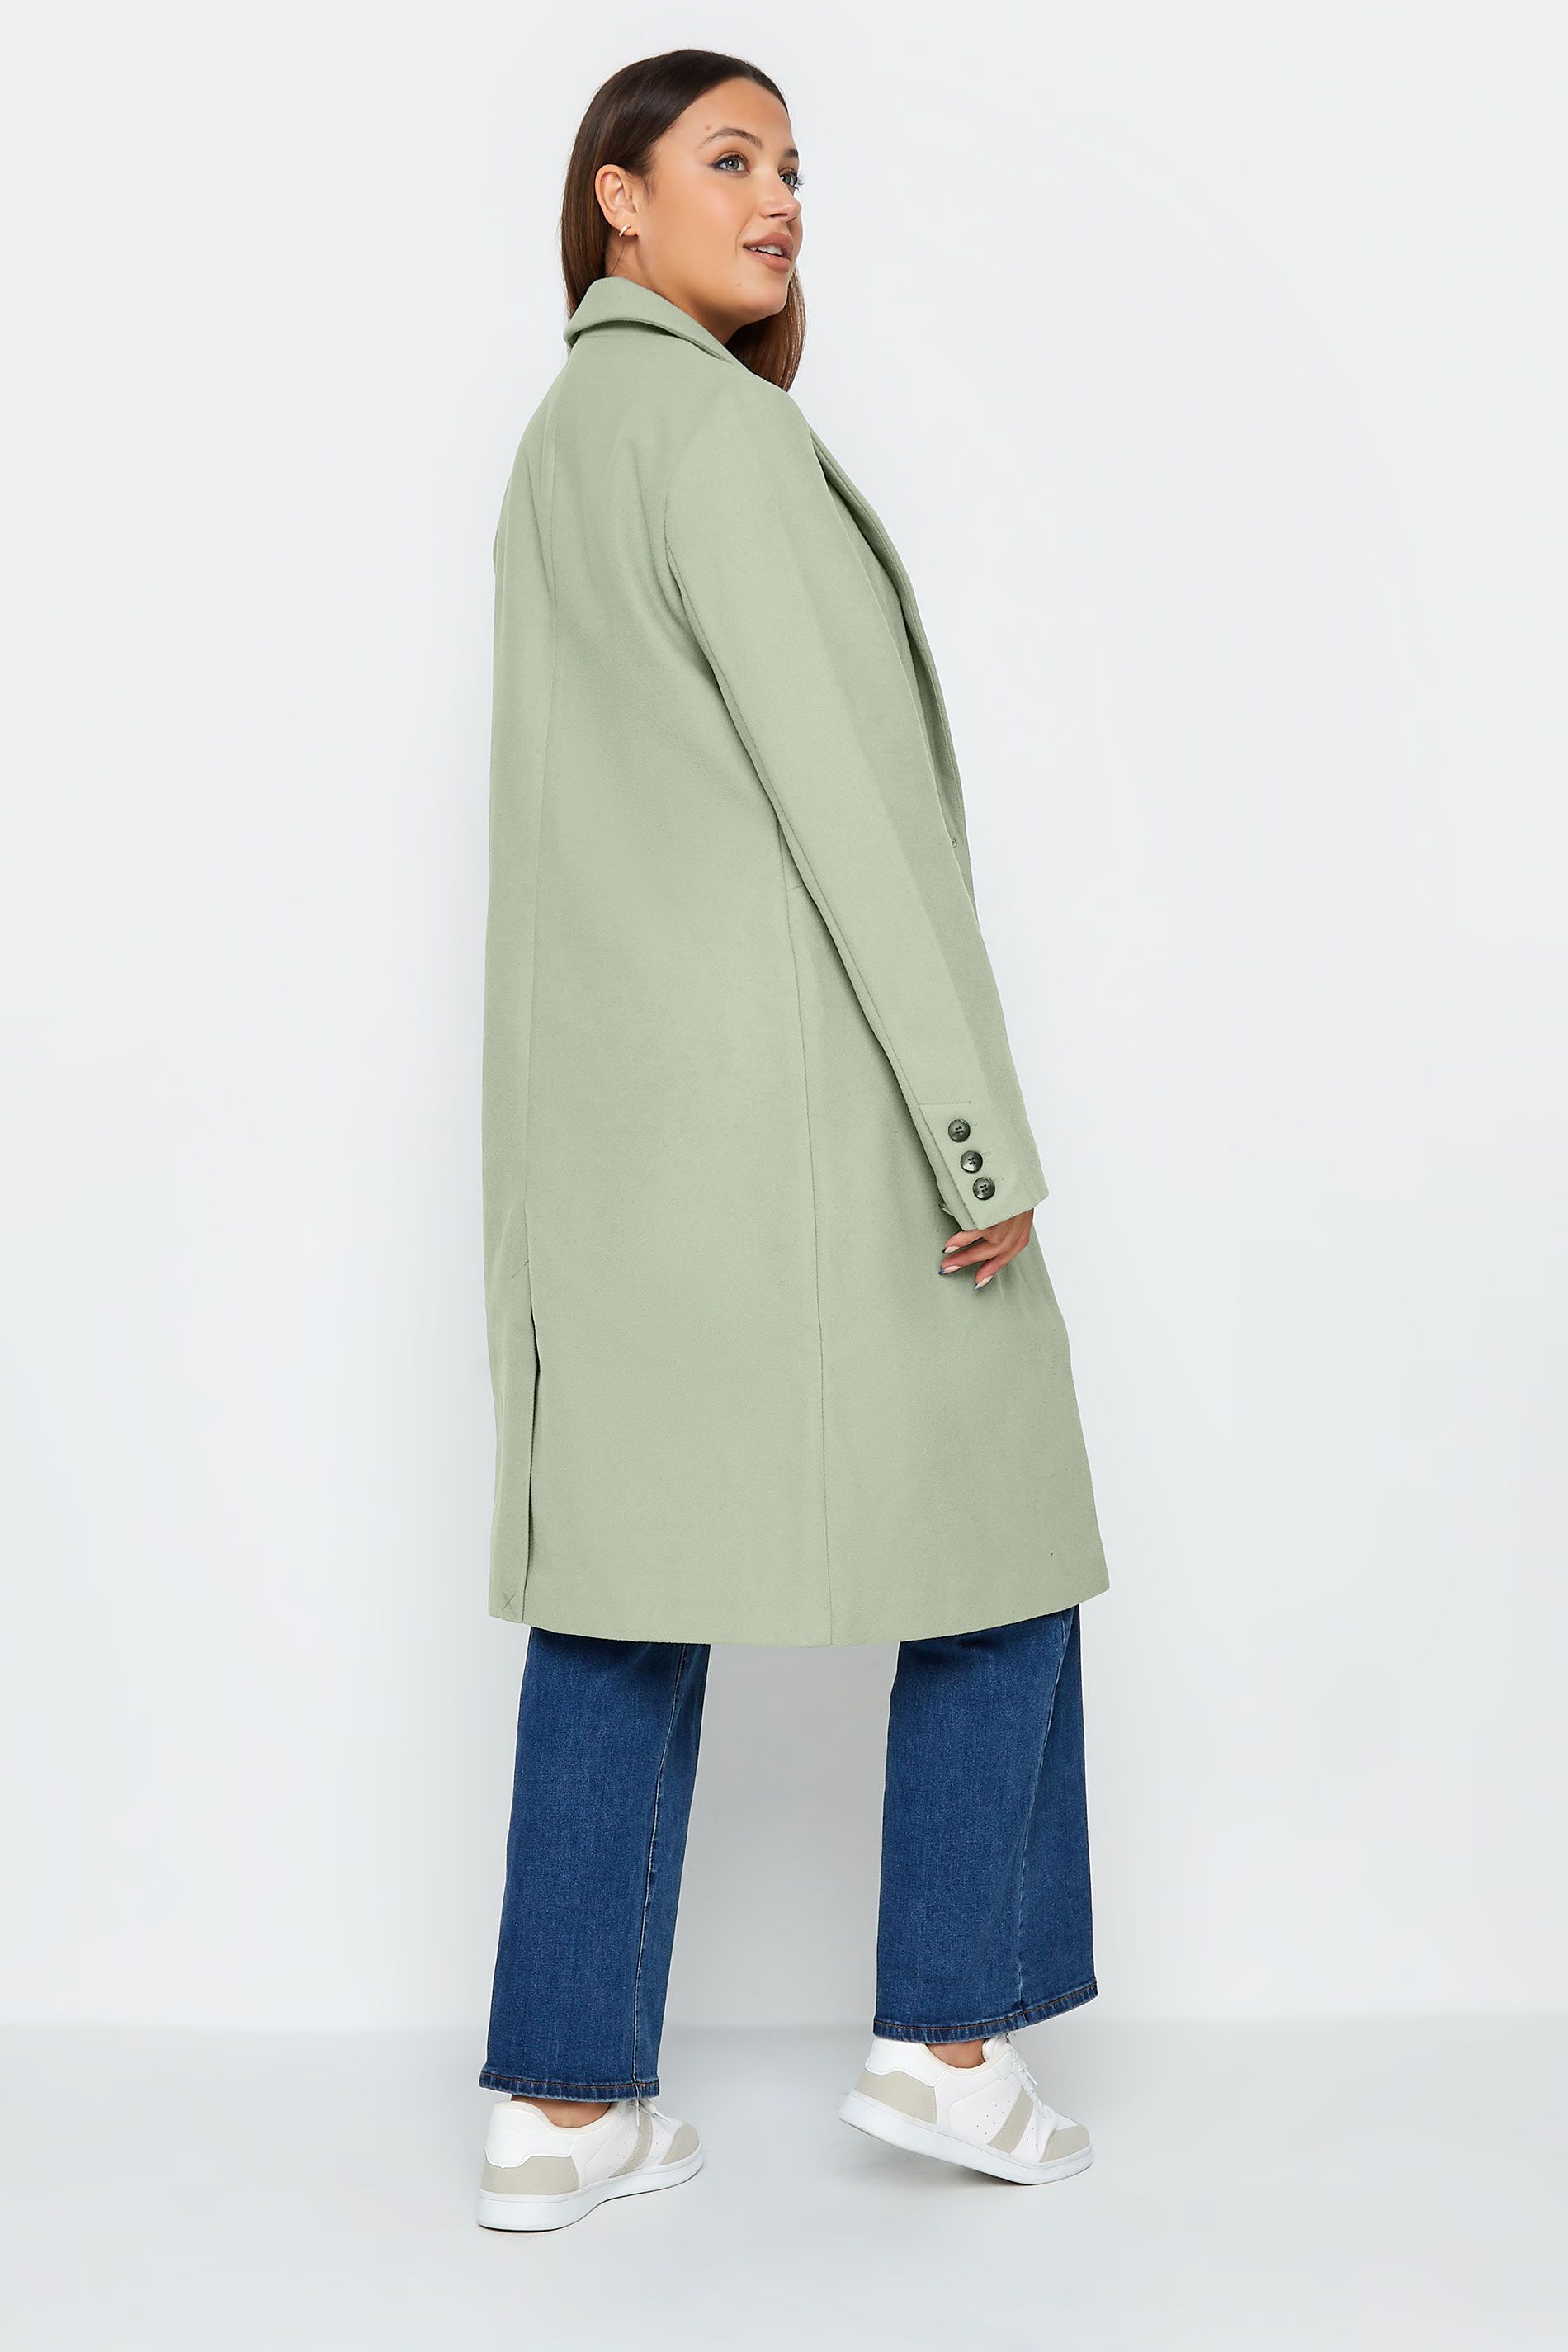 LTS Tall Sage Green Midi Formal Coat | Long Tall Sally